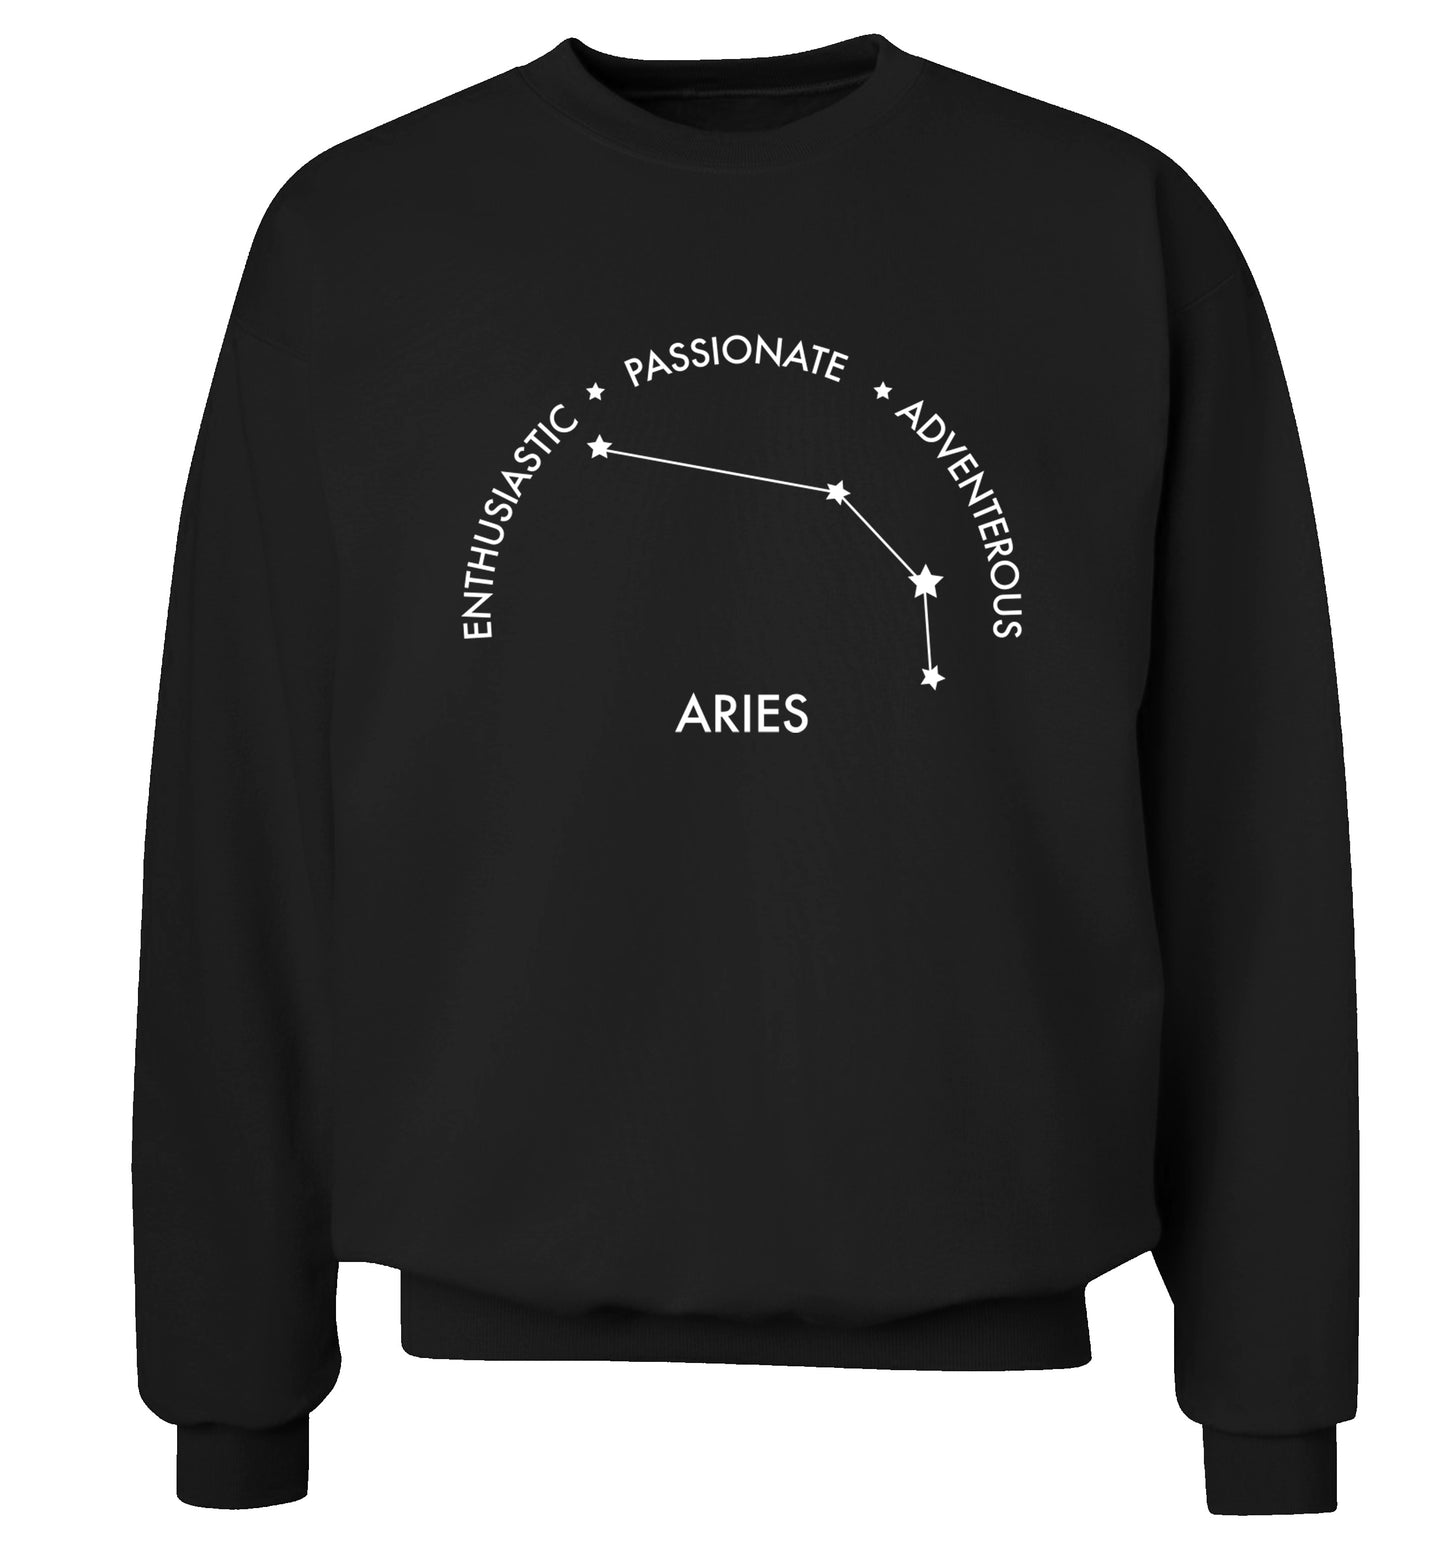 Aries enthusiastic | passionate | adventerous Adult's unisex black Sweater 2XL